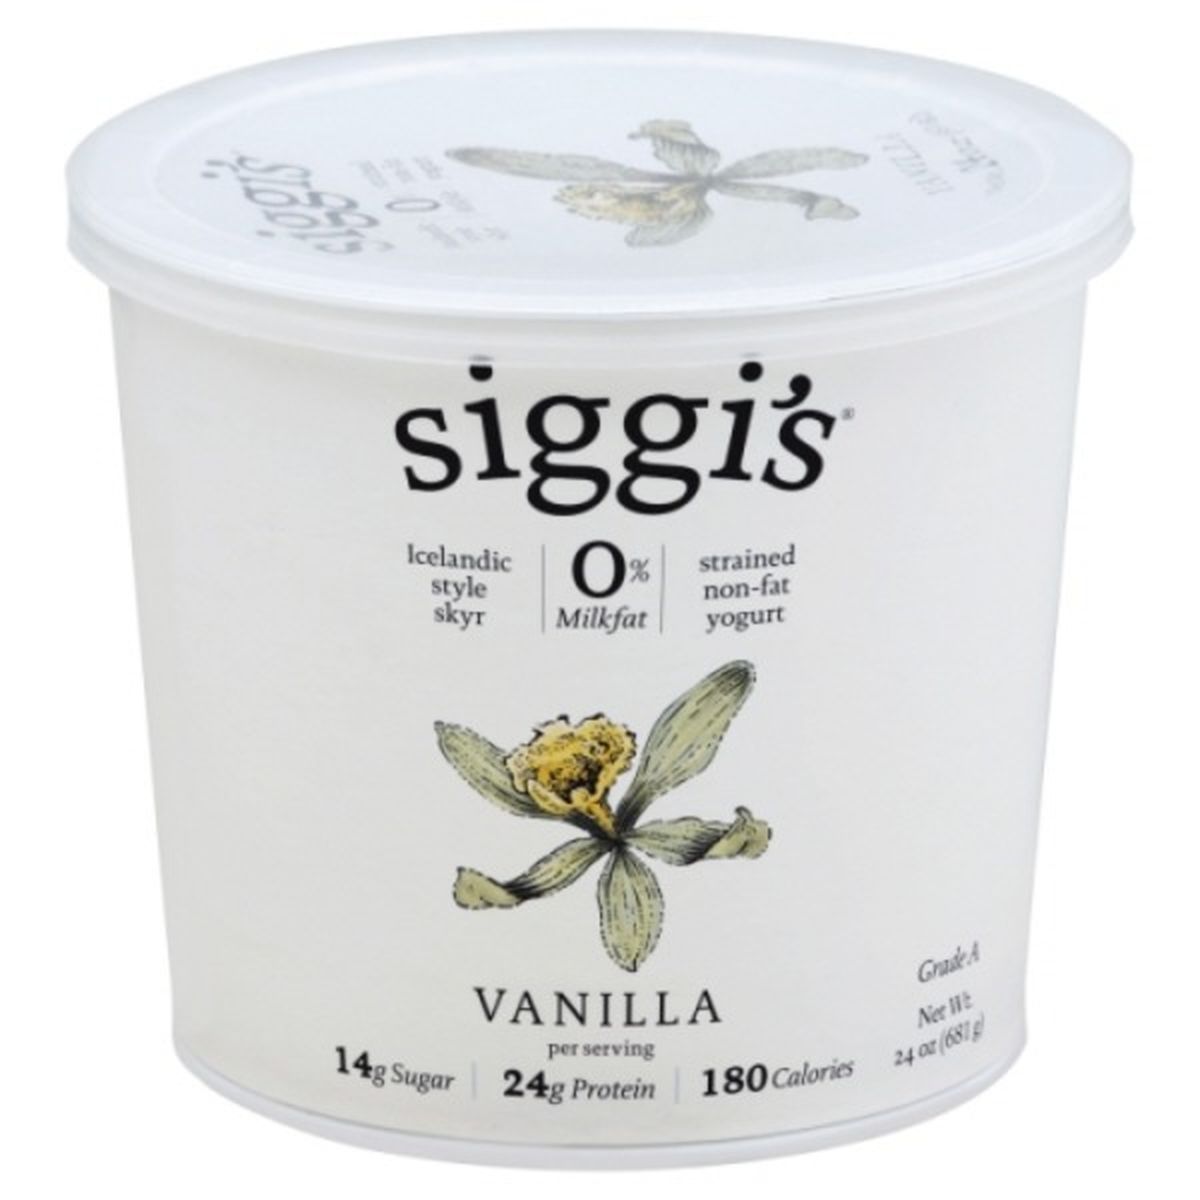 Calories in Siggi's Yogurt, Non-Fat, Icelandic Style Skyr, Strained, Vanilla